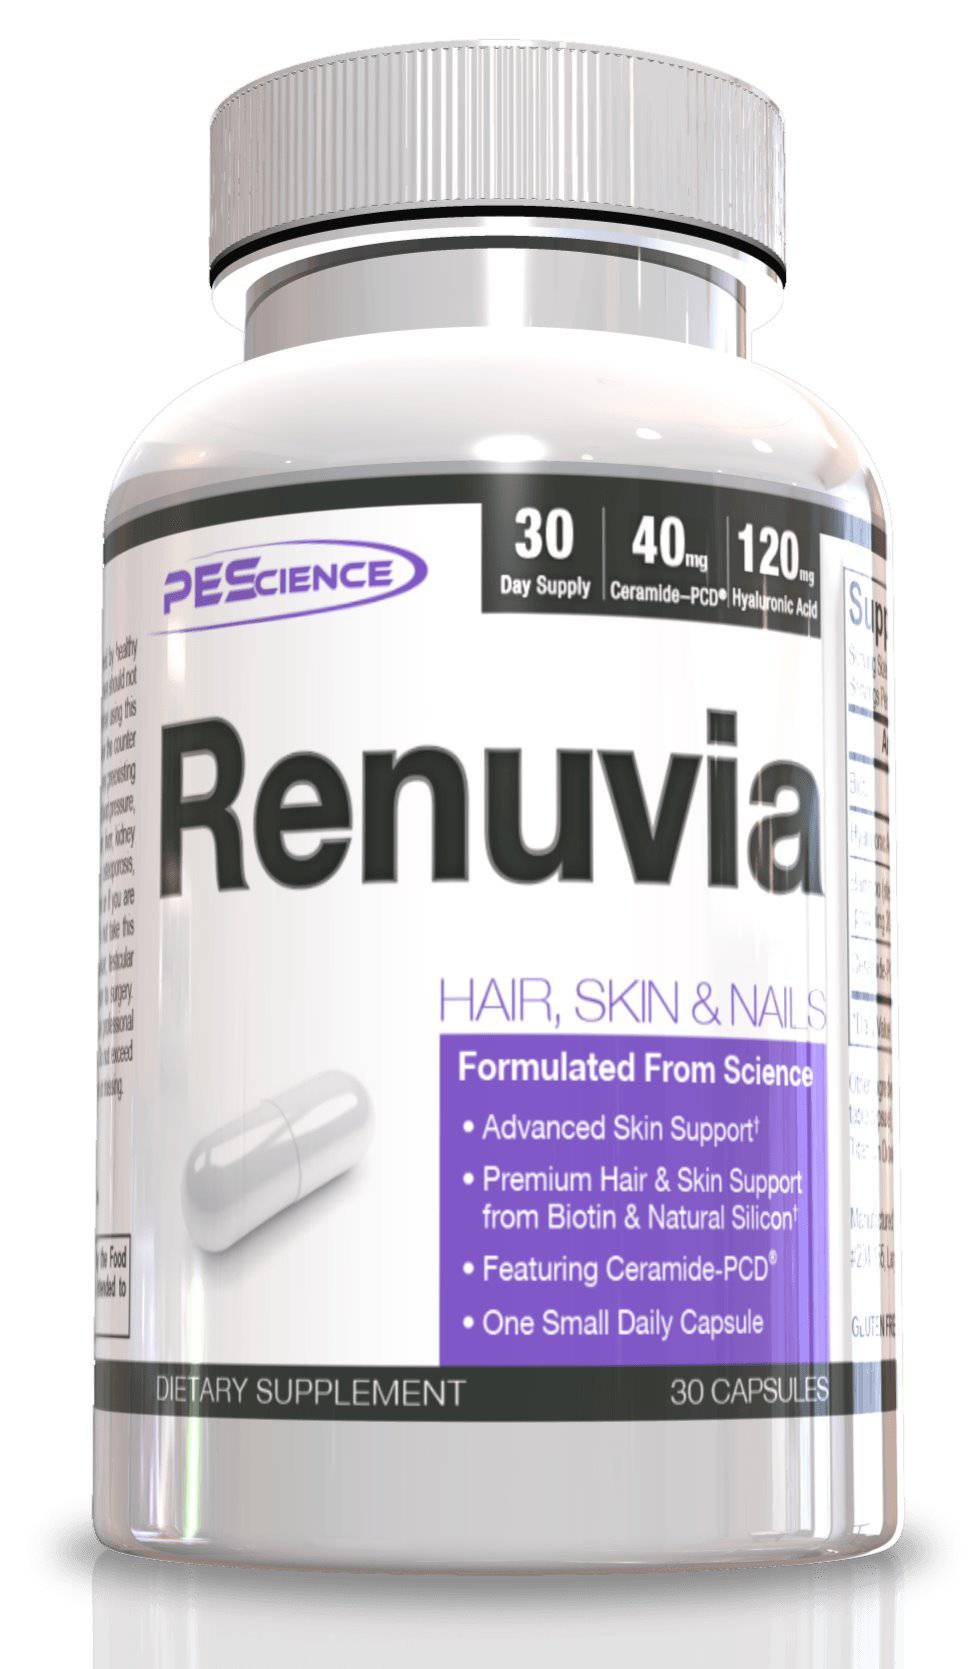 Renuvia - Bemoxie Supplements